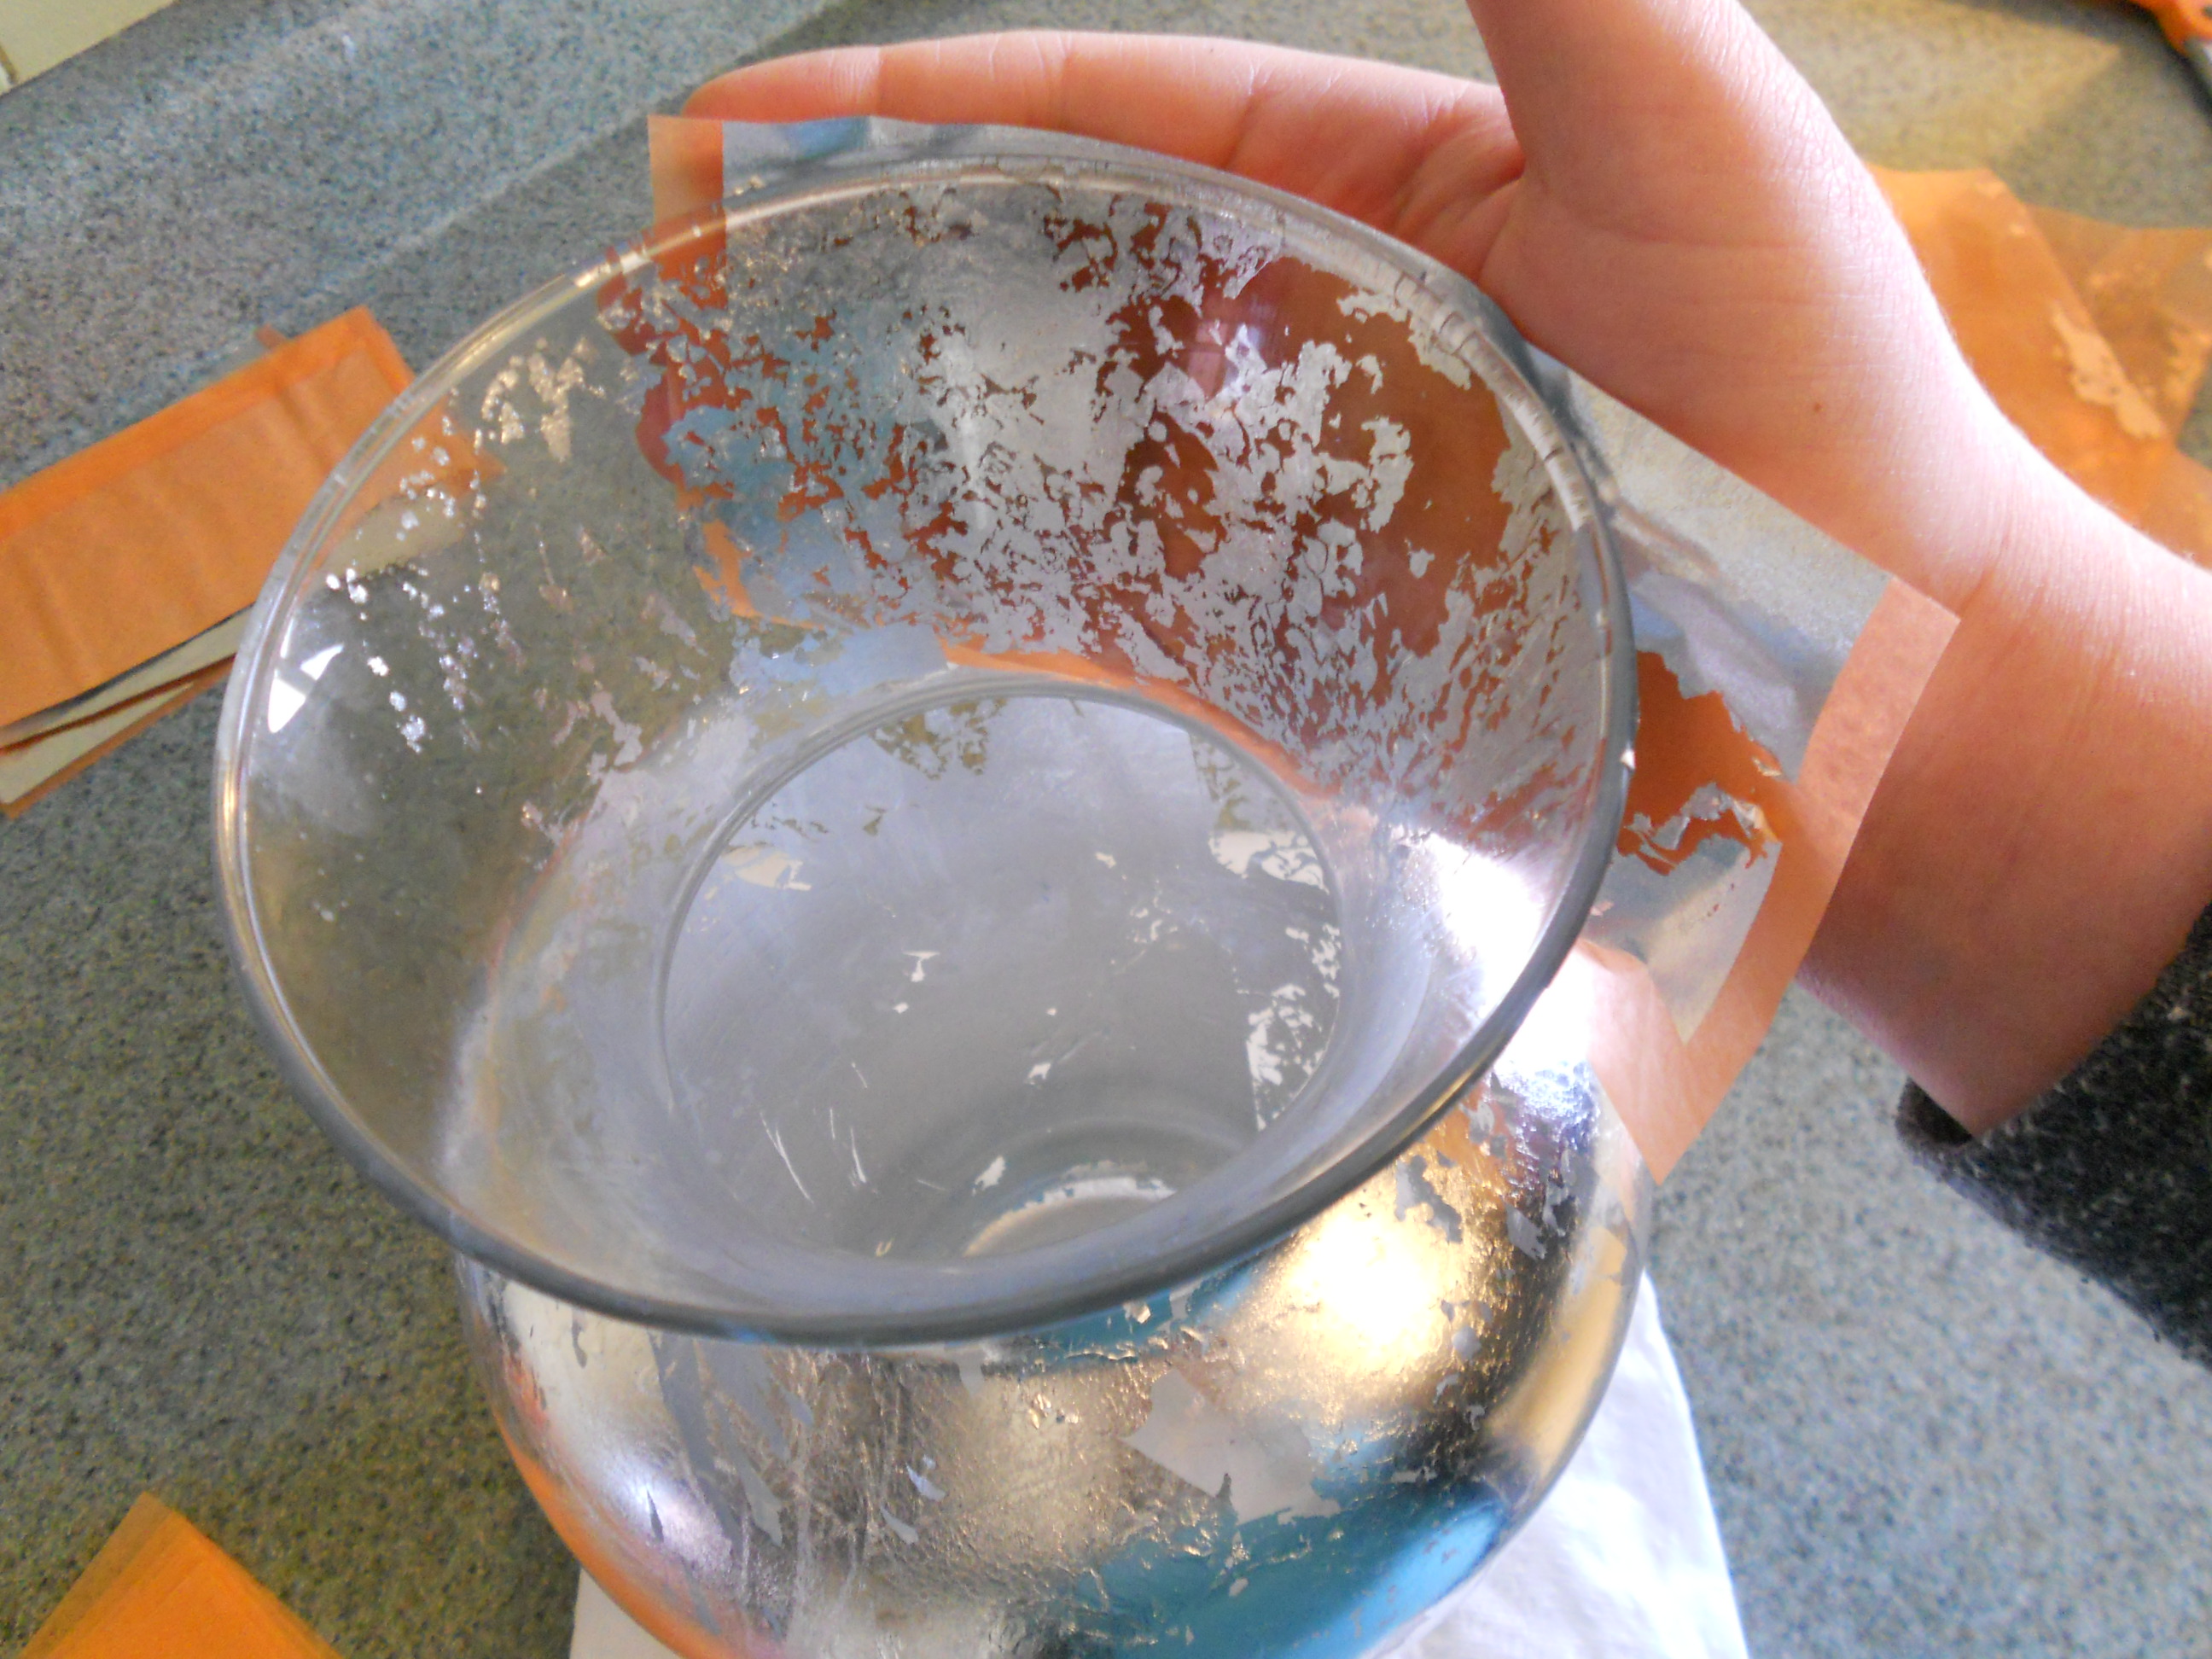 silver evaporation pellets deposited on glass